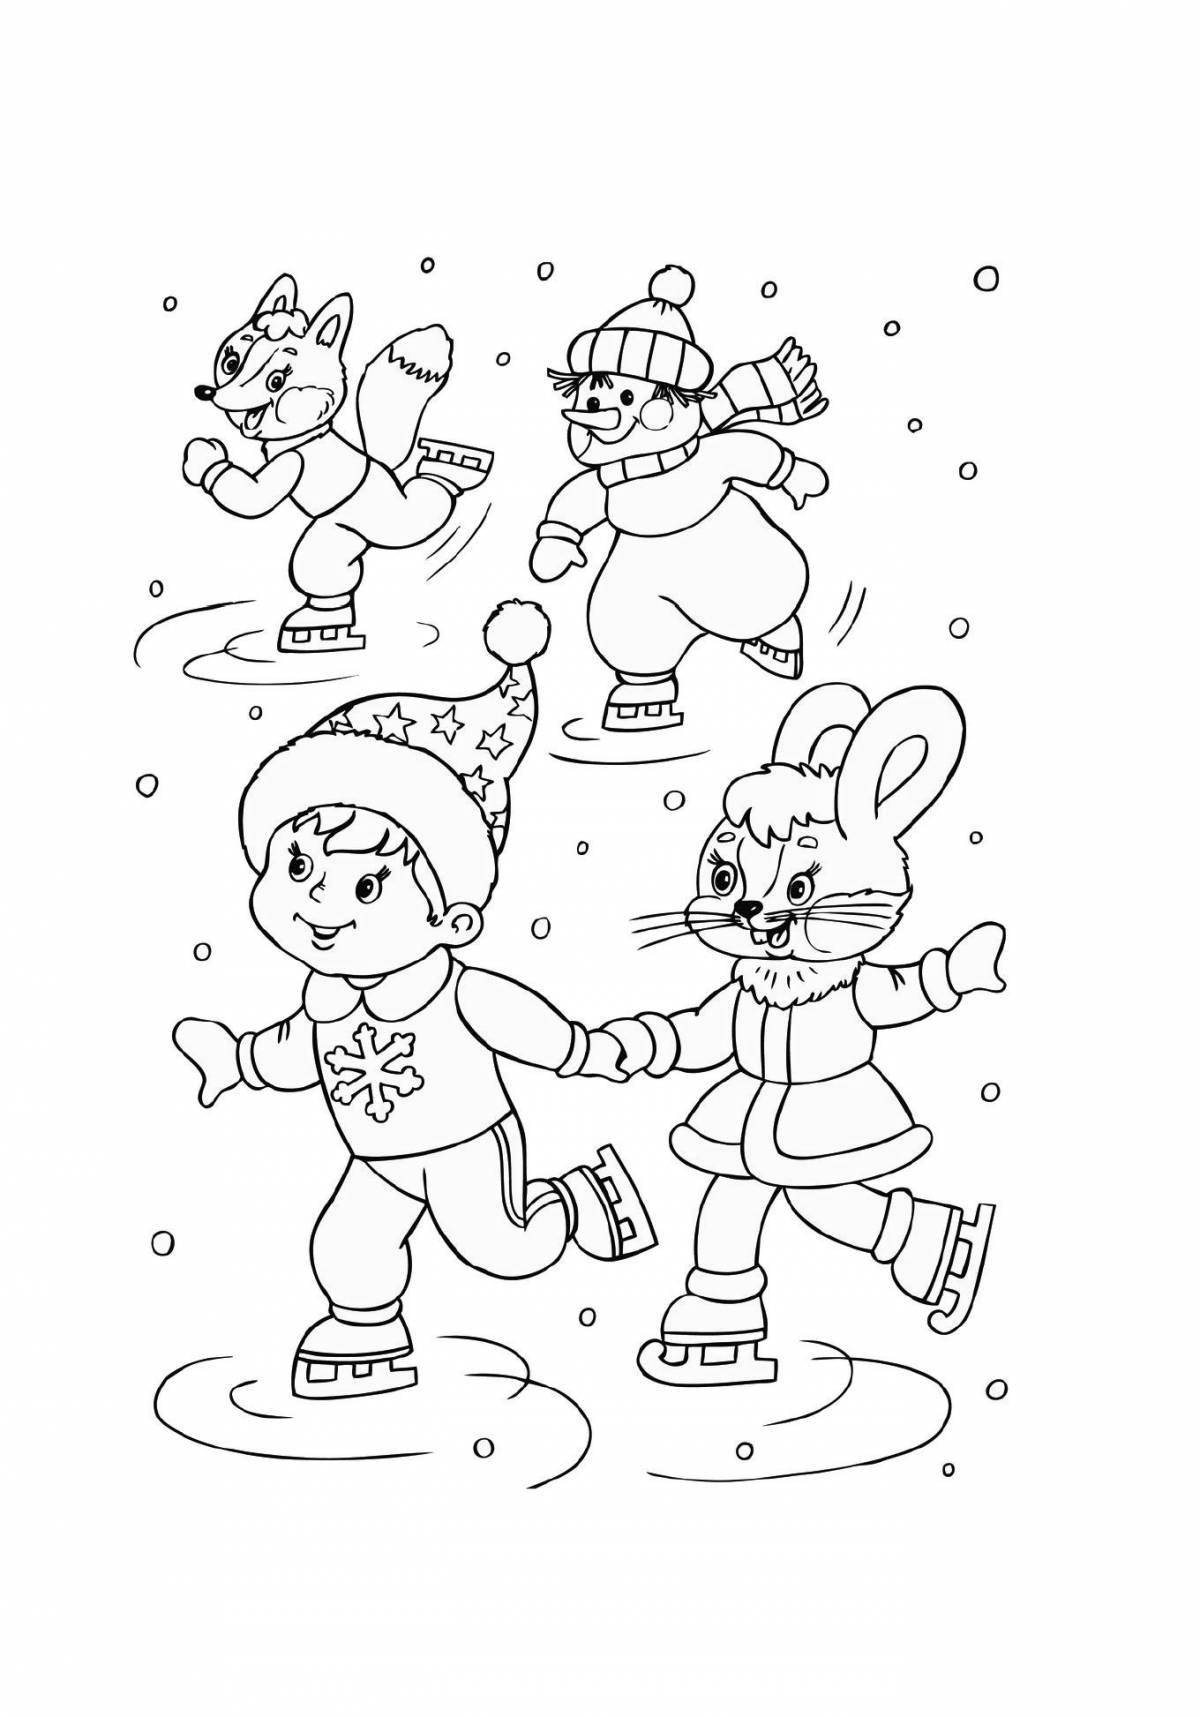 Nimble children's ice skating